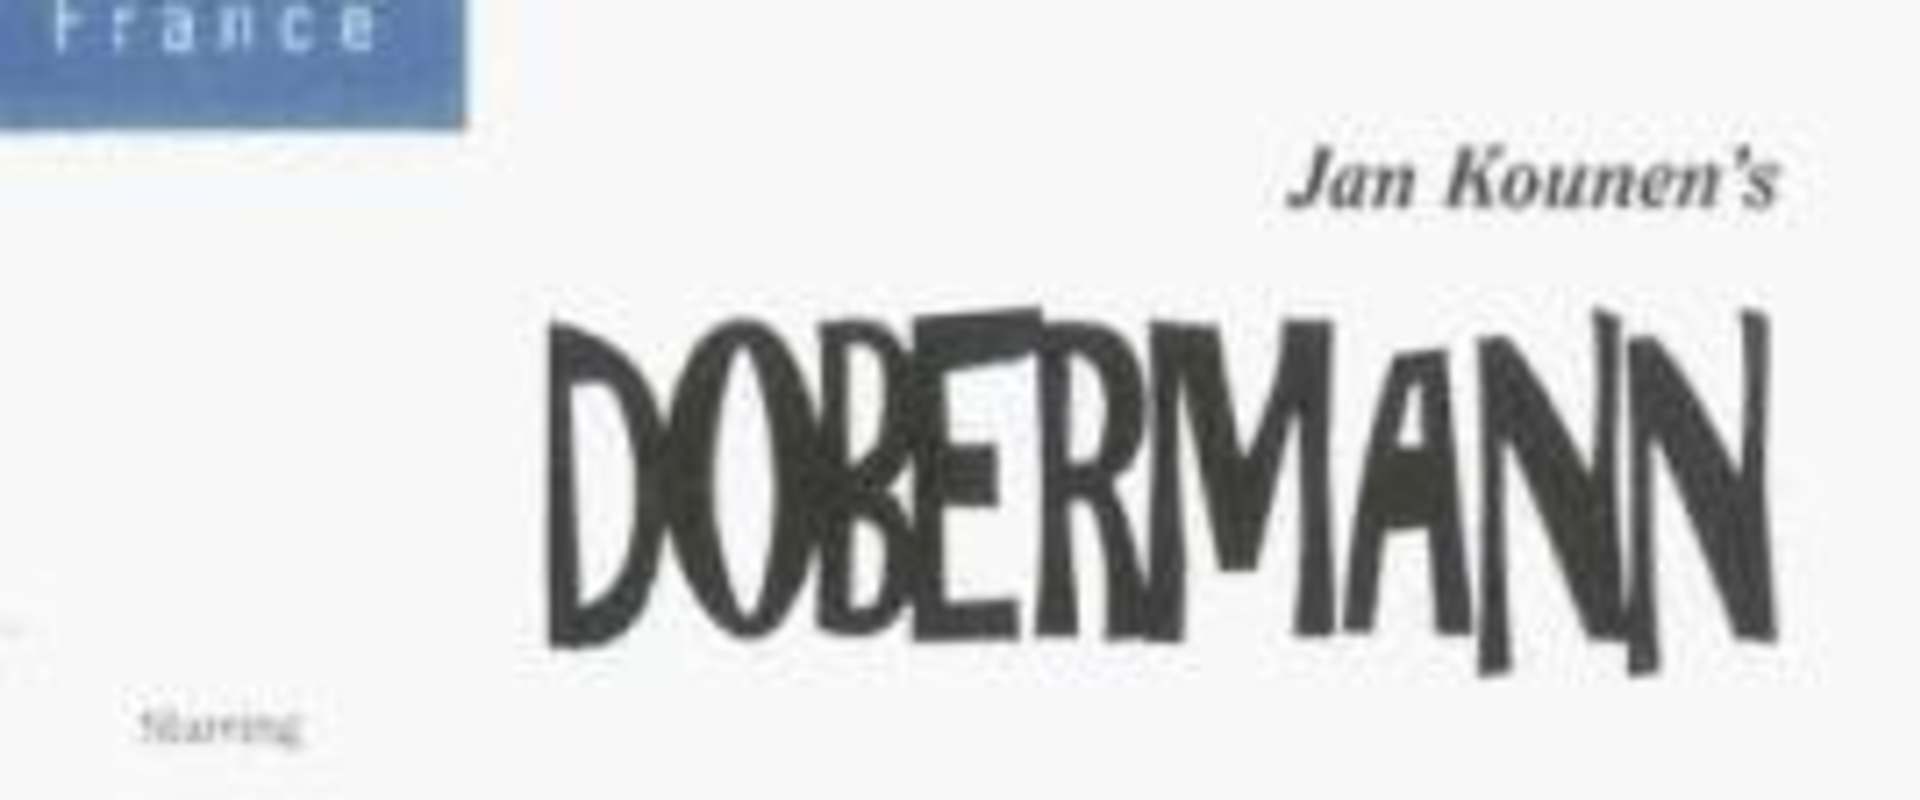 Dobermann background 2